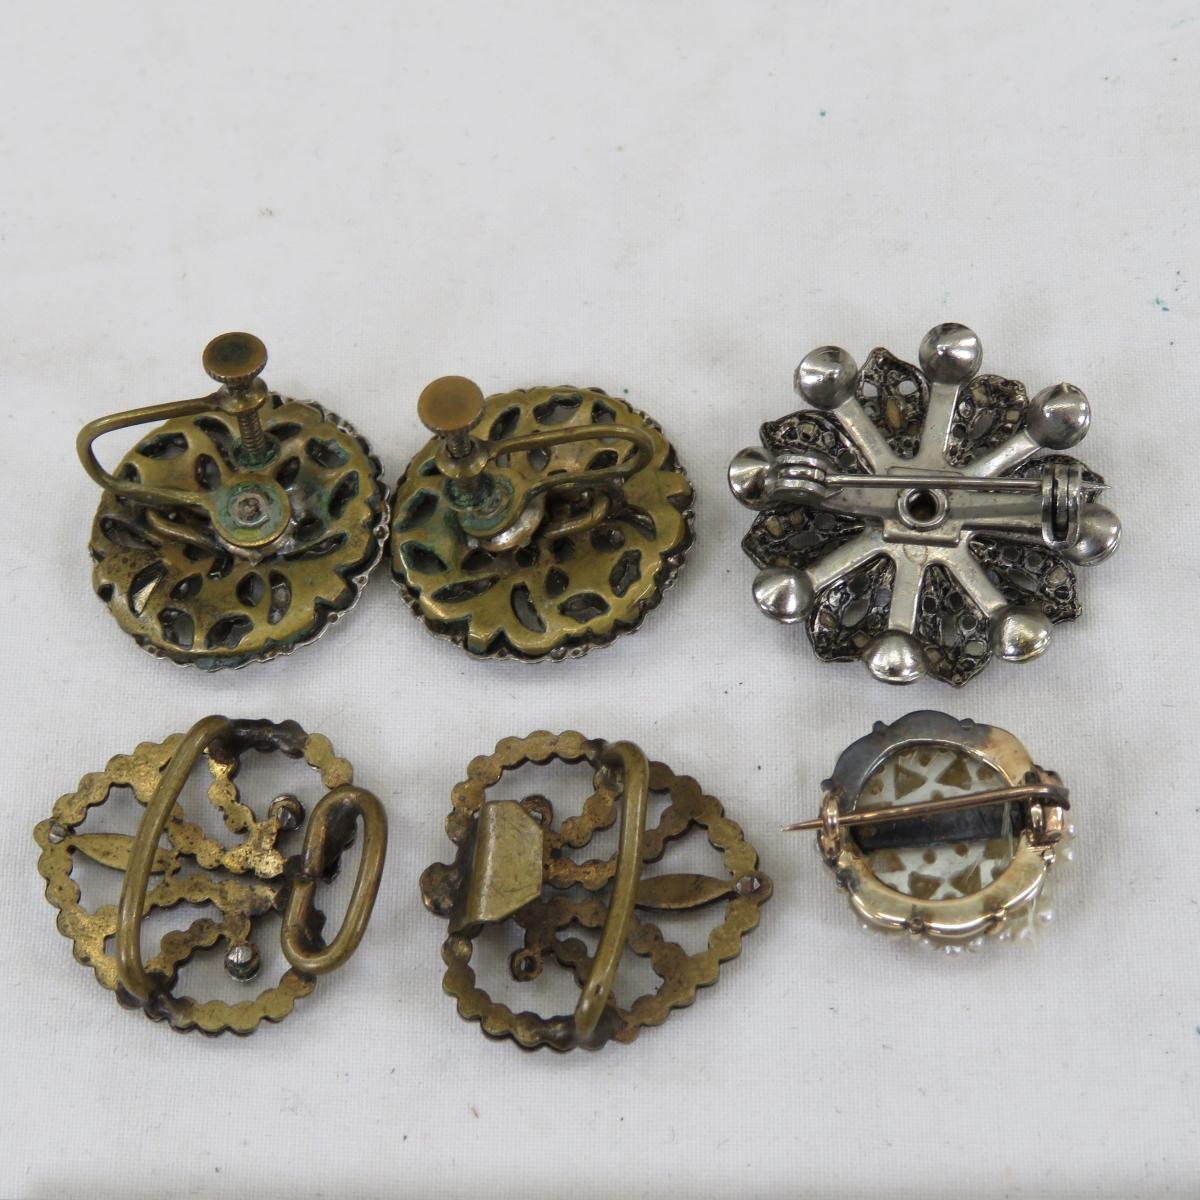 Antique & Vintage Jewelry- Stick Pins & More